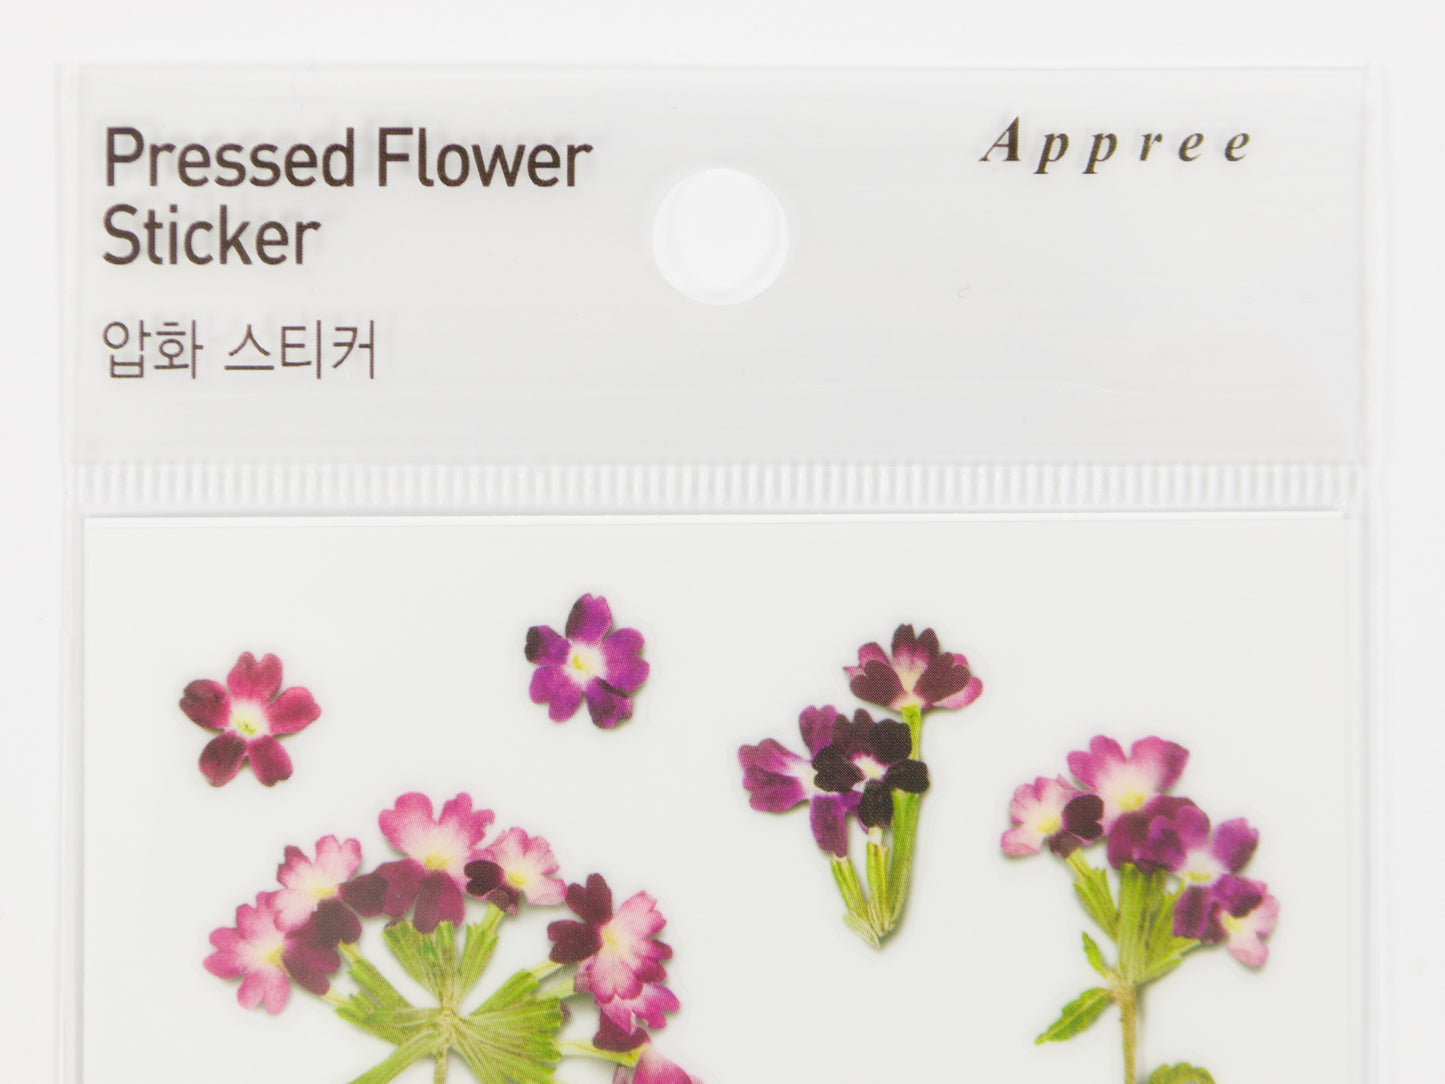 Appree Pressed Flower Stickers